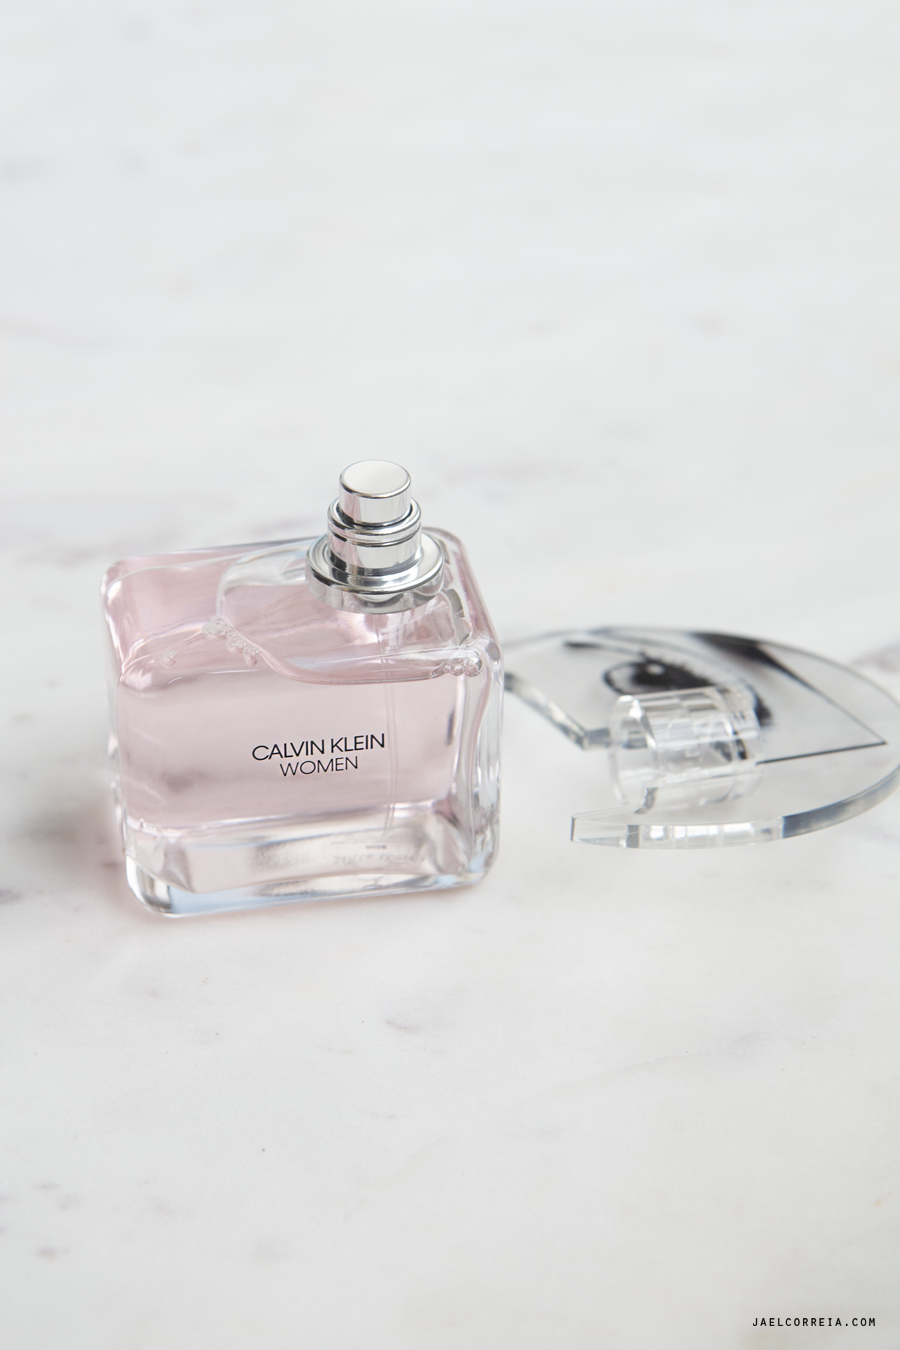 CK women Calvin Klein women eau de parfum perfume review jael correia portugal notino perfumes baratos originais femininos